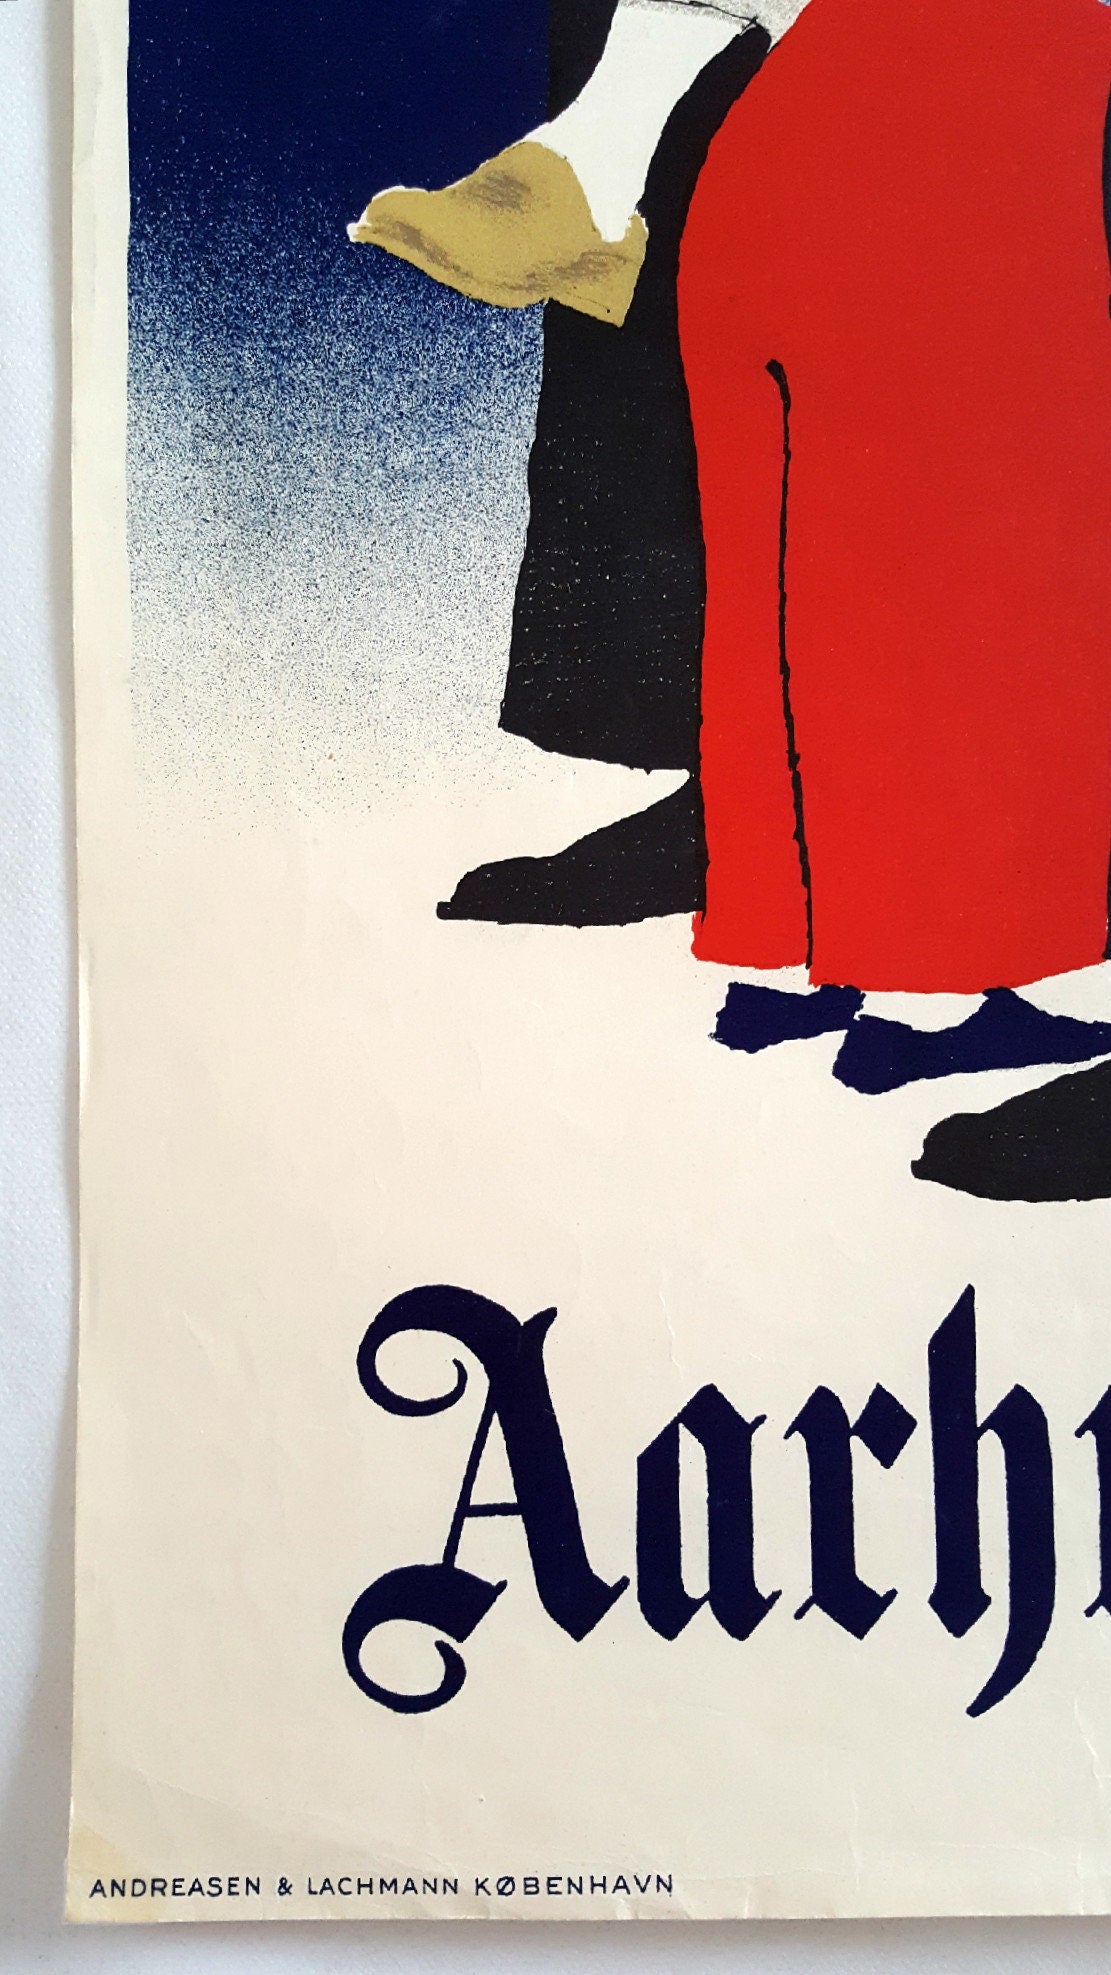 1940s Newspaper Advertisement by Arne Ungermann Aarhus Stiftstidende - Original Vintage Poster